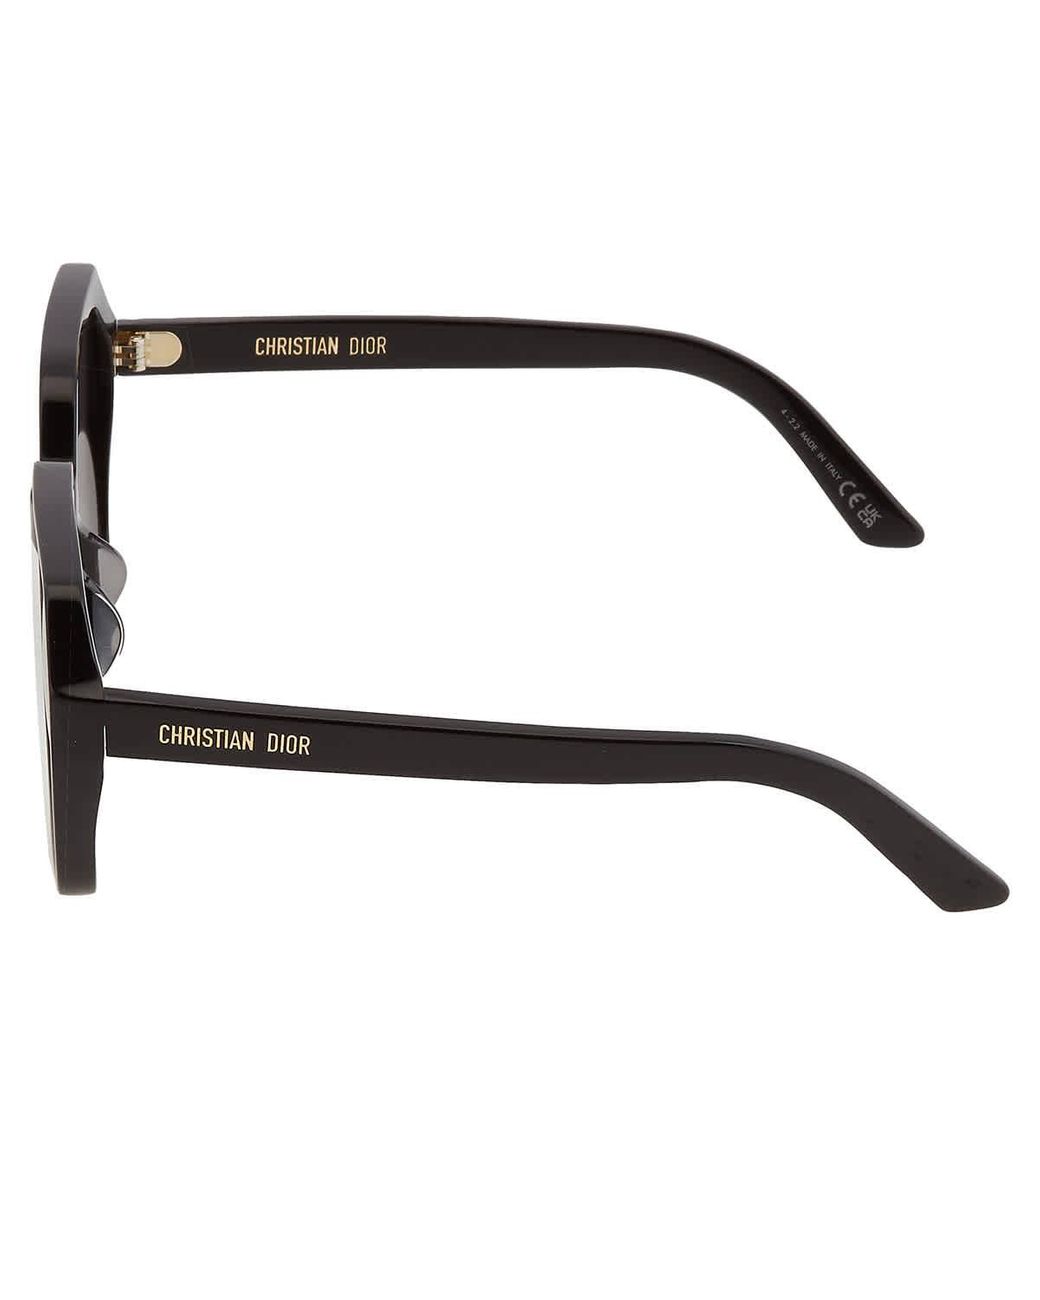 Dior B27 S1I Geometric Sunglasses, 56mm - Black/Smoke